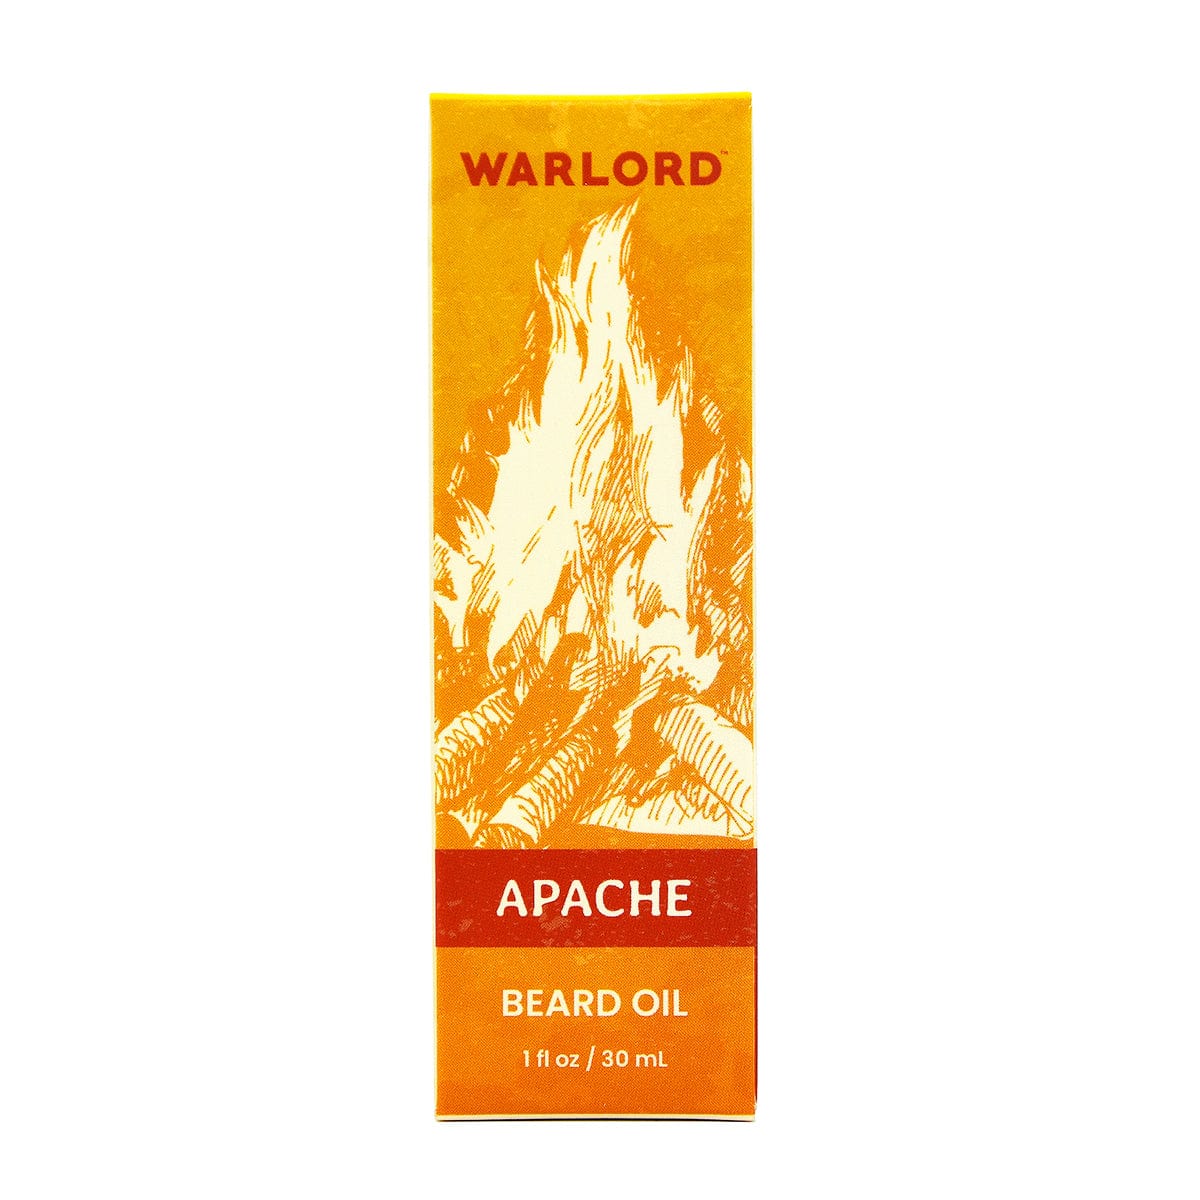 Apache Beard Oil - Warlord - Men's Grooming Essentials